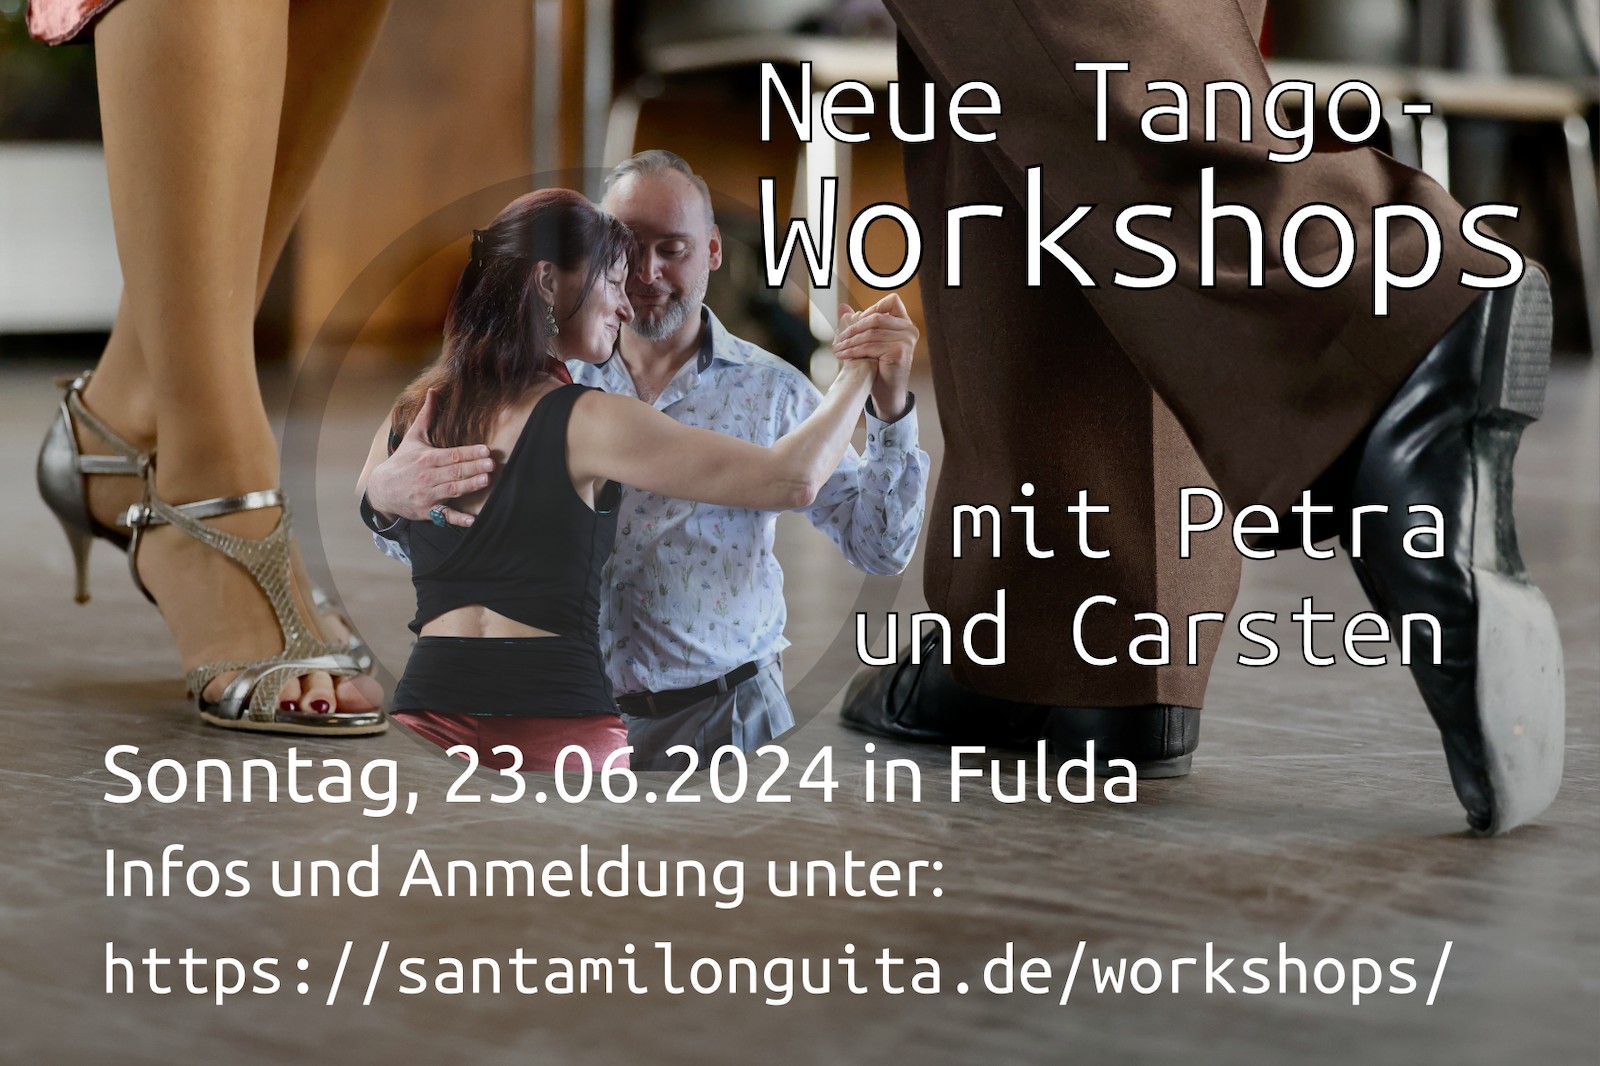 Workshops am Sonntag, 23.06.2024